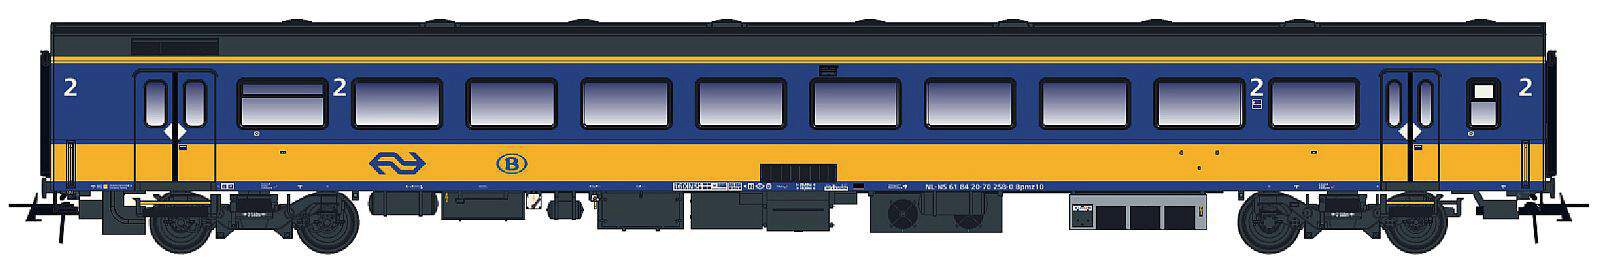 L.S. Models 44241 Personenwagen ICRmh 2.Kl. Bpmz NS, Ep.VI, Benelux